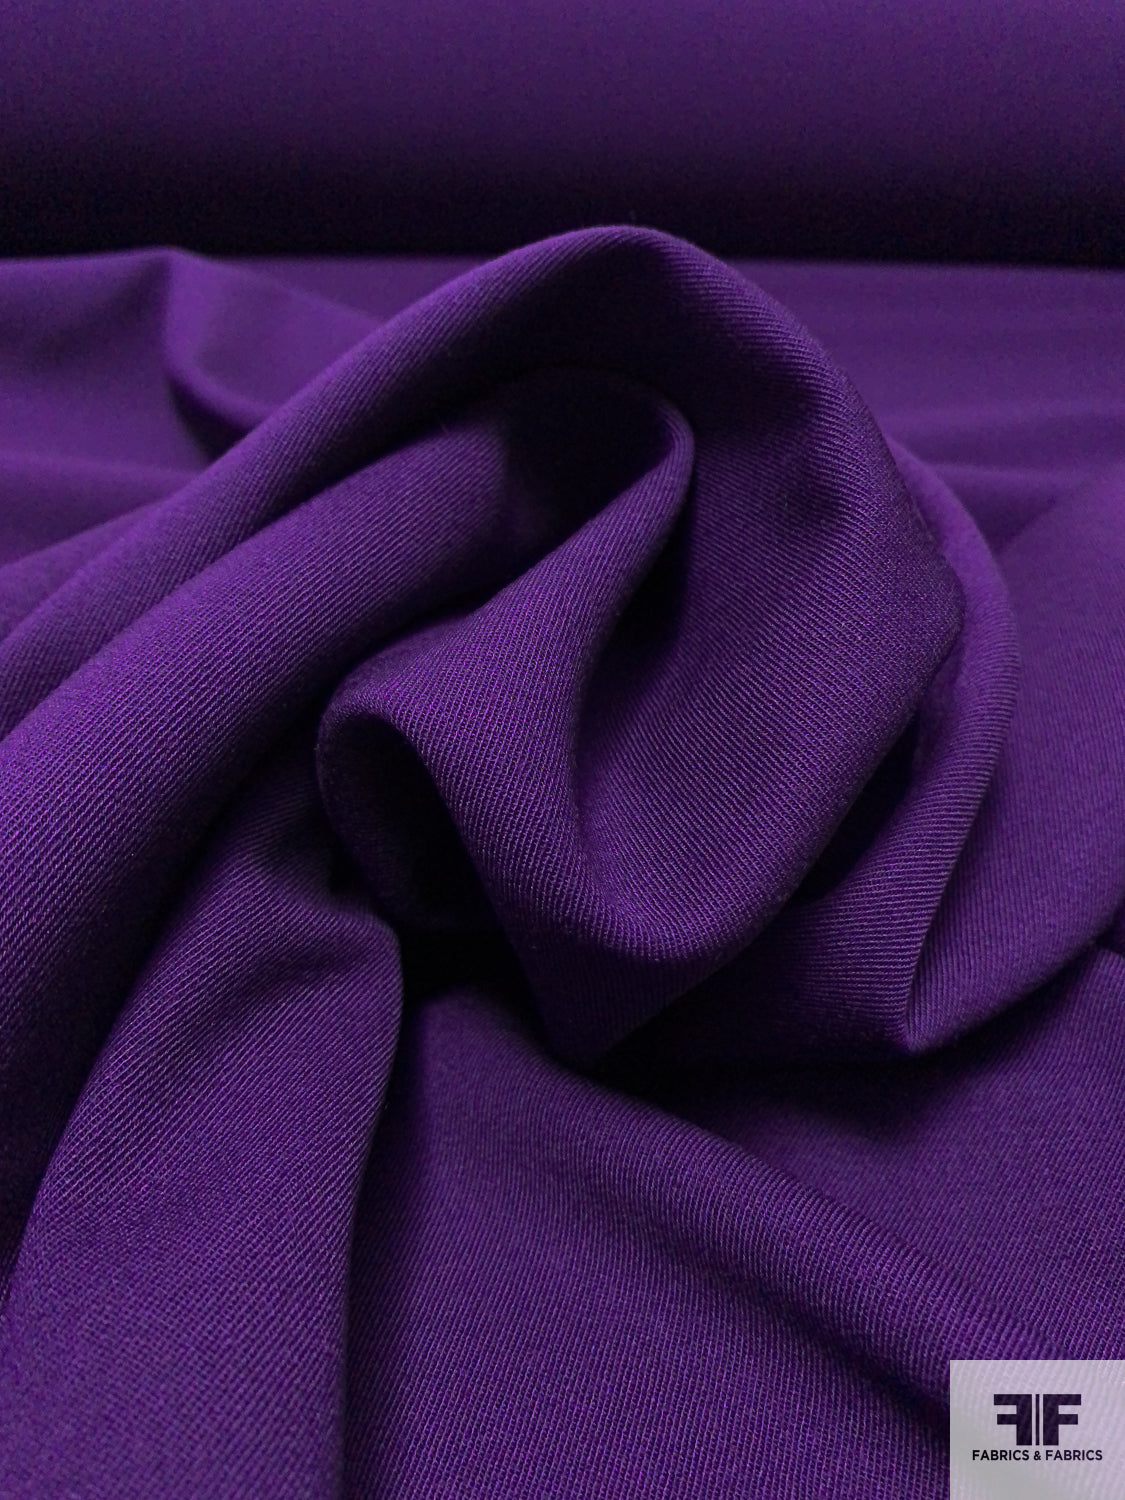 National Nonwovens Purple - Purple Rain - Wool Felt Giant Sheet - 35% Wool Blend - 1 36x36 inch XXL Sheet